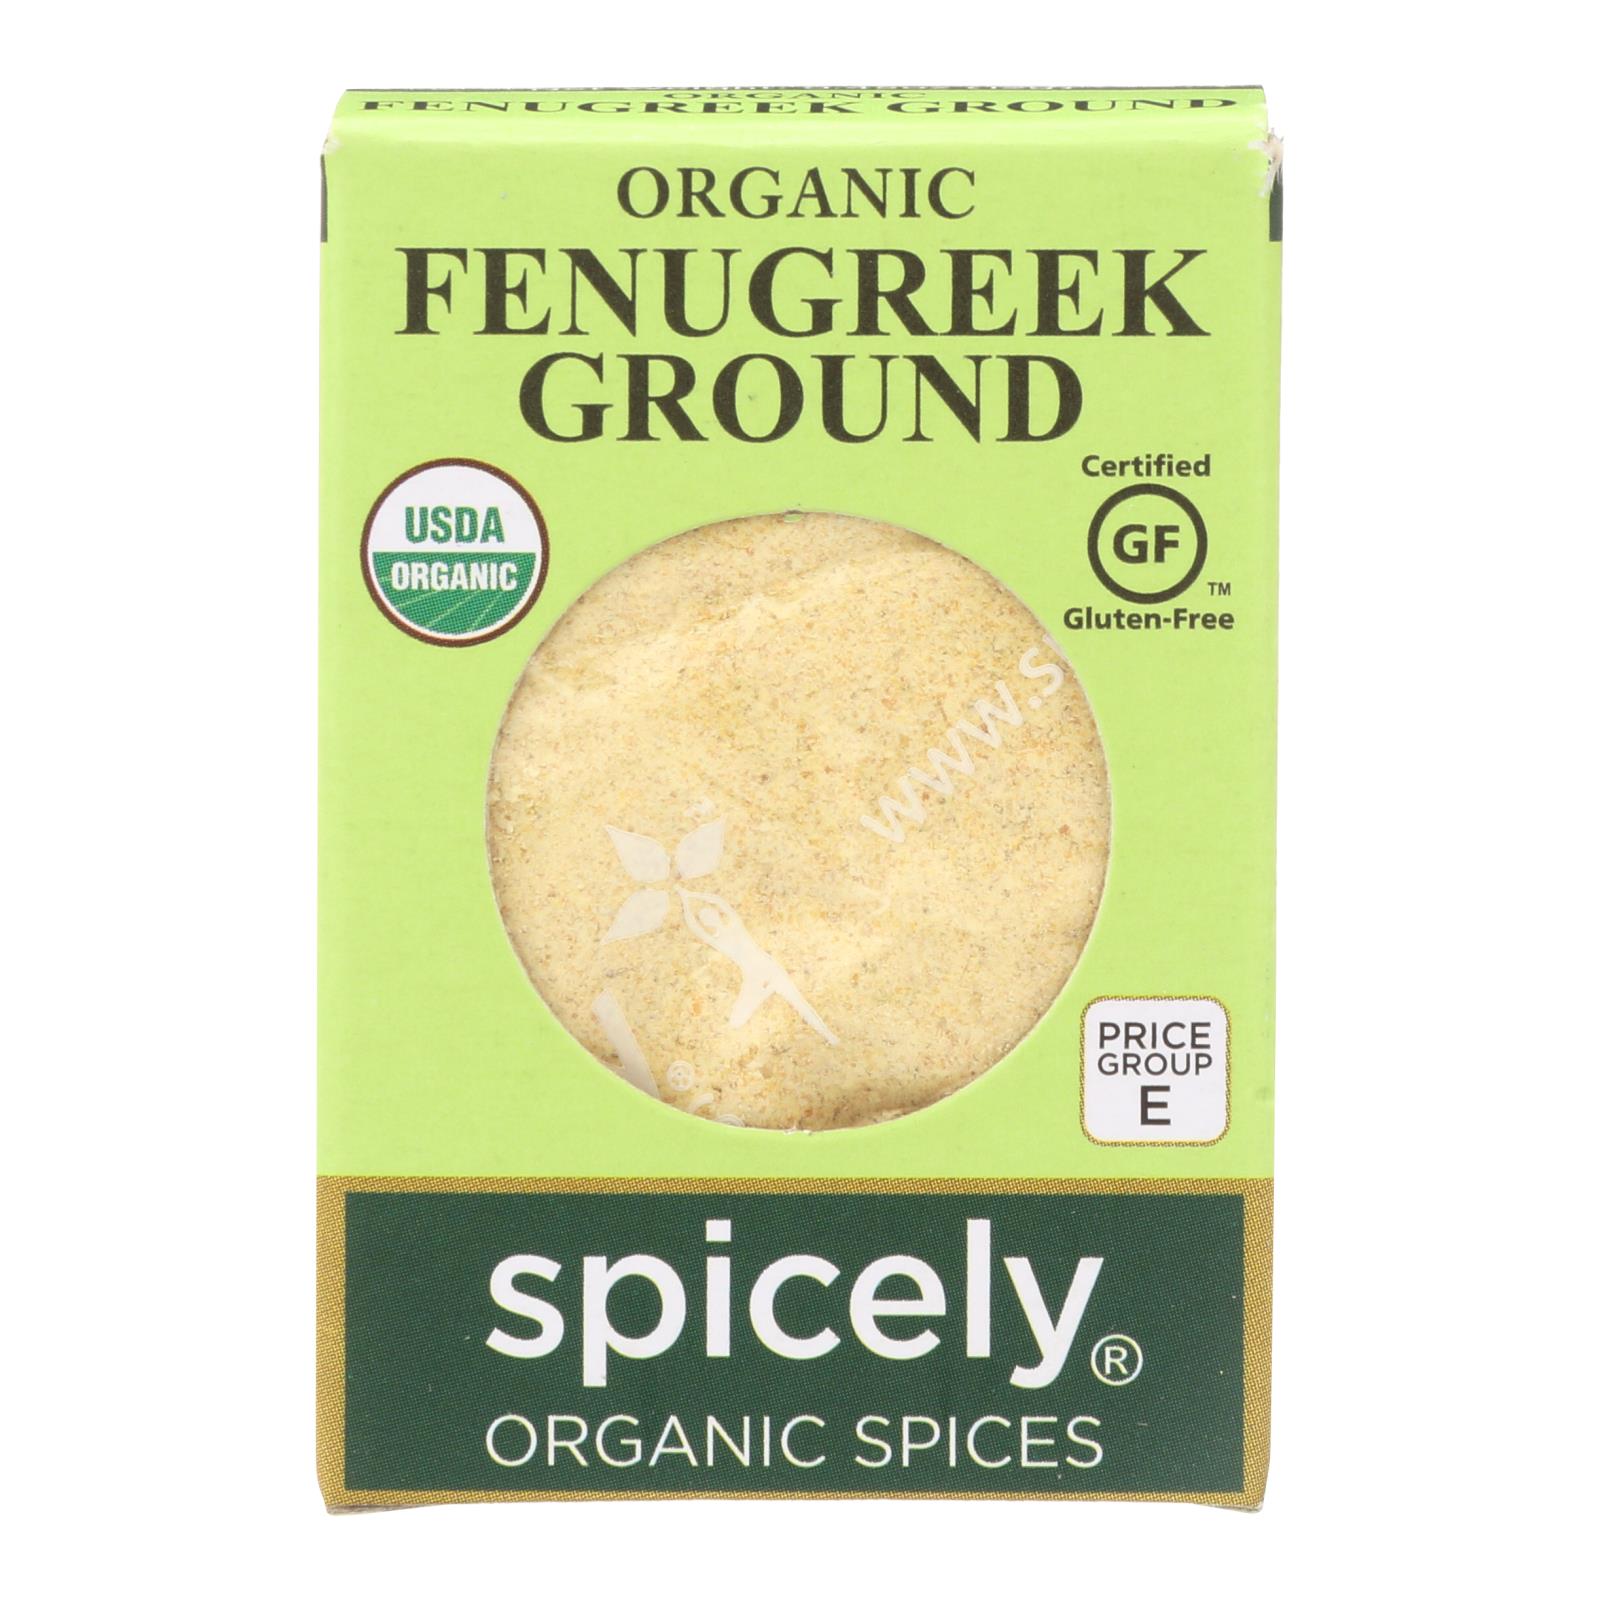 Spicely Organics - Organic Fenugreek - Ground - 6개 묶음상품 - 0.45 oz.